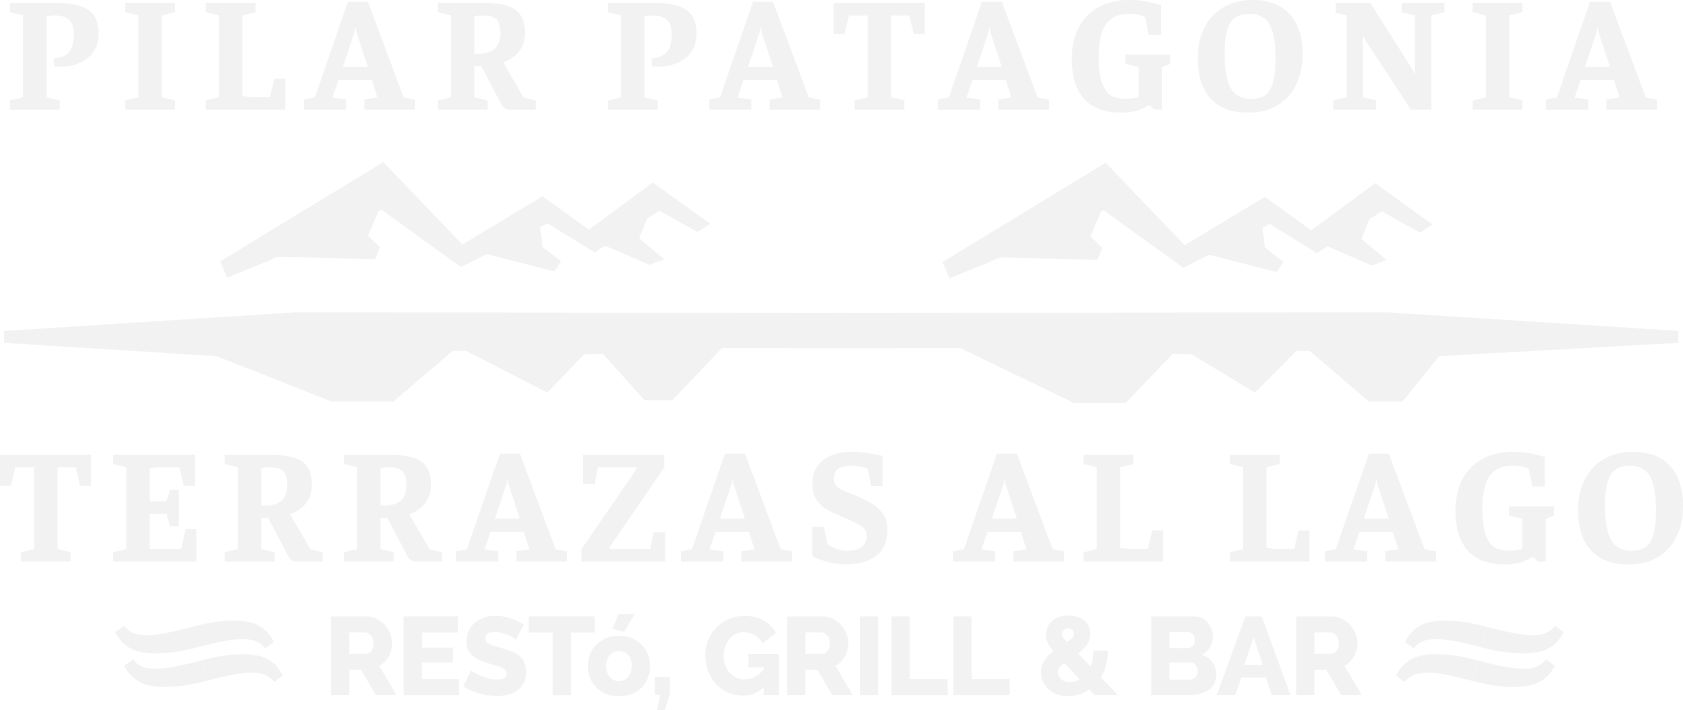 TAL - Terrazas al Lago (logo)